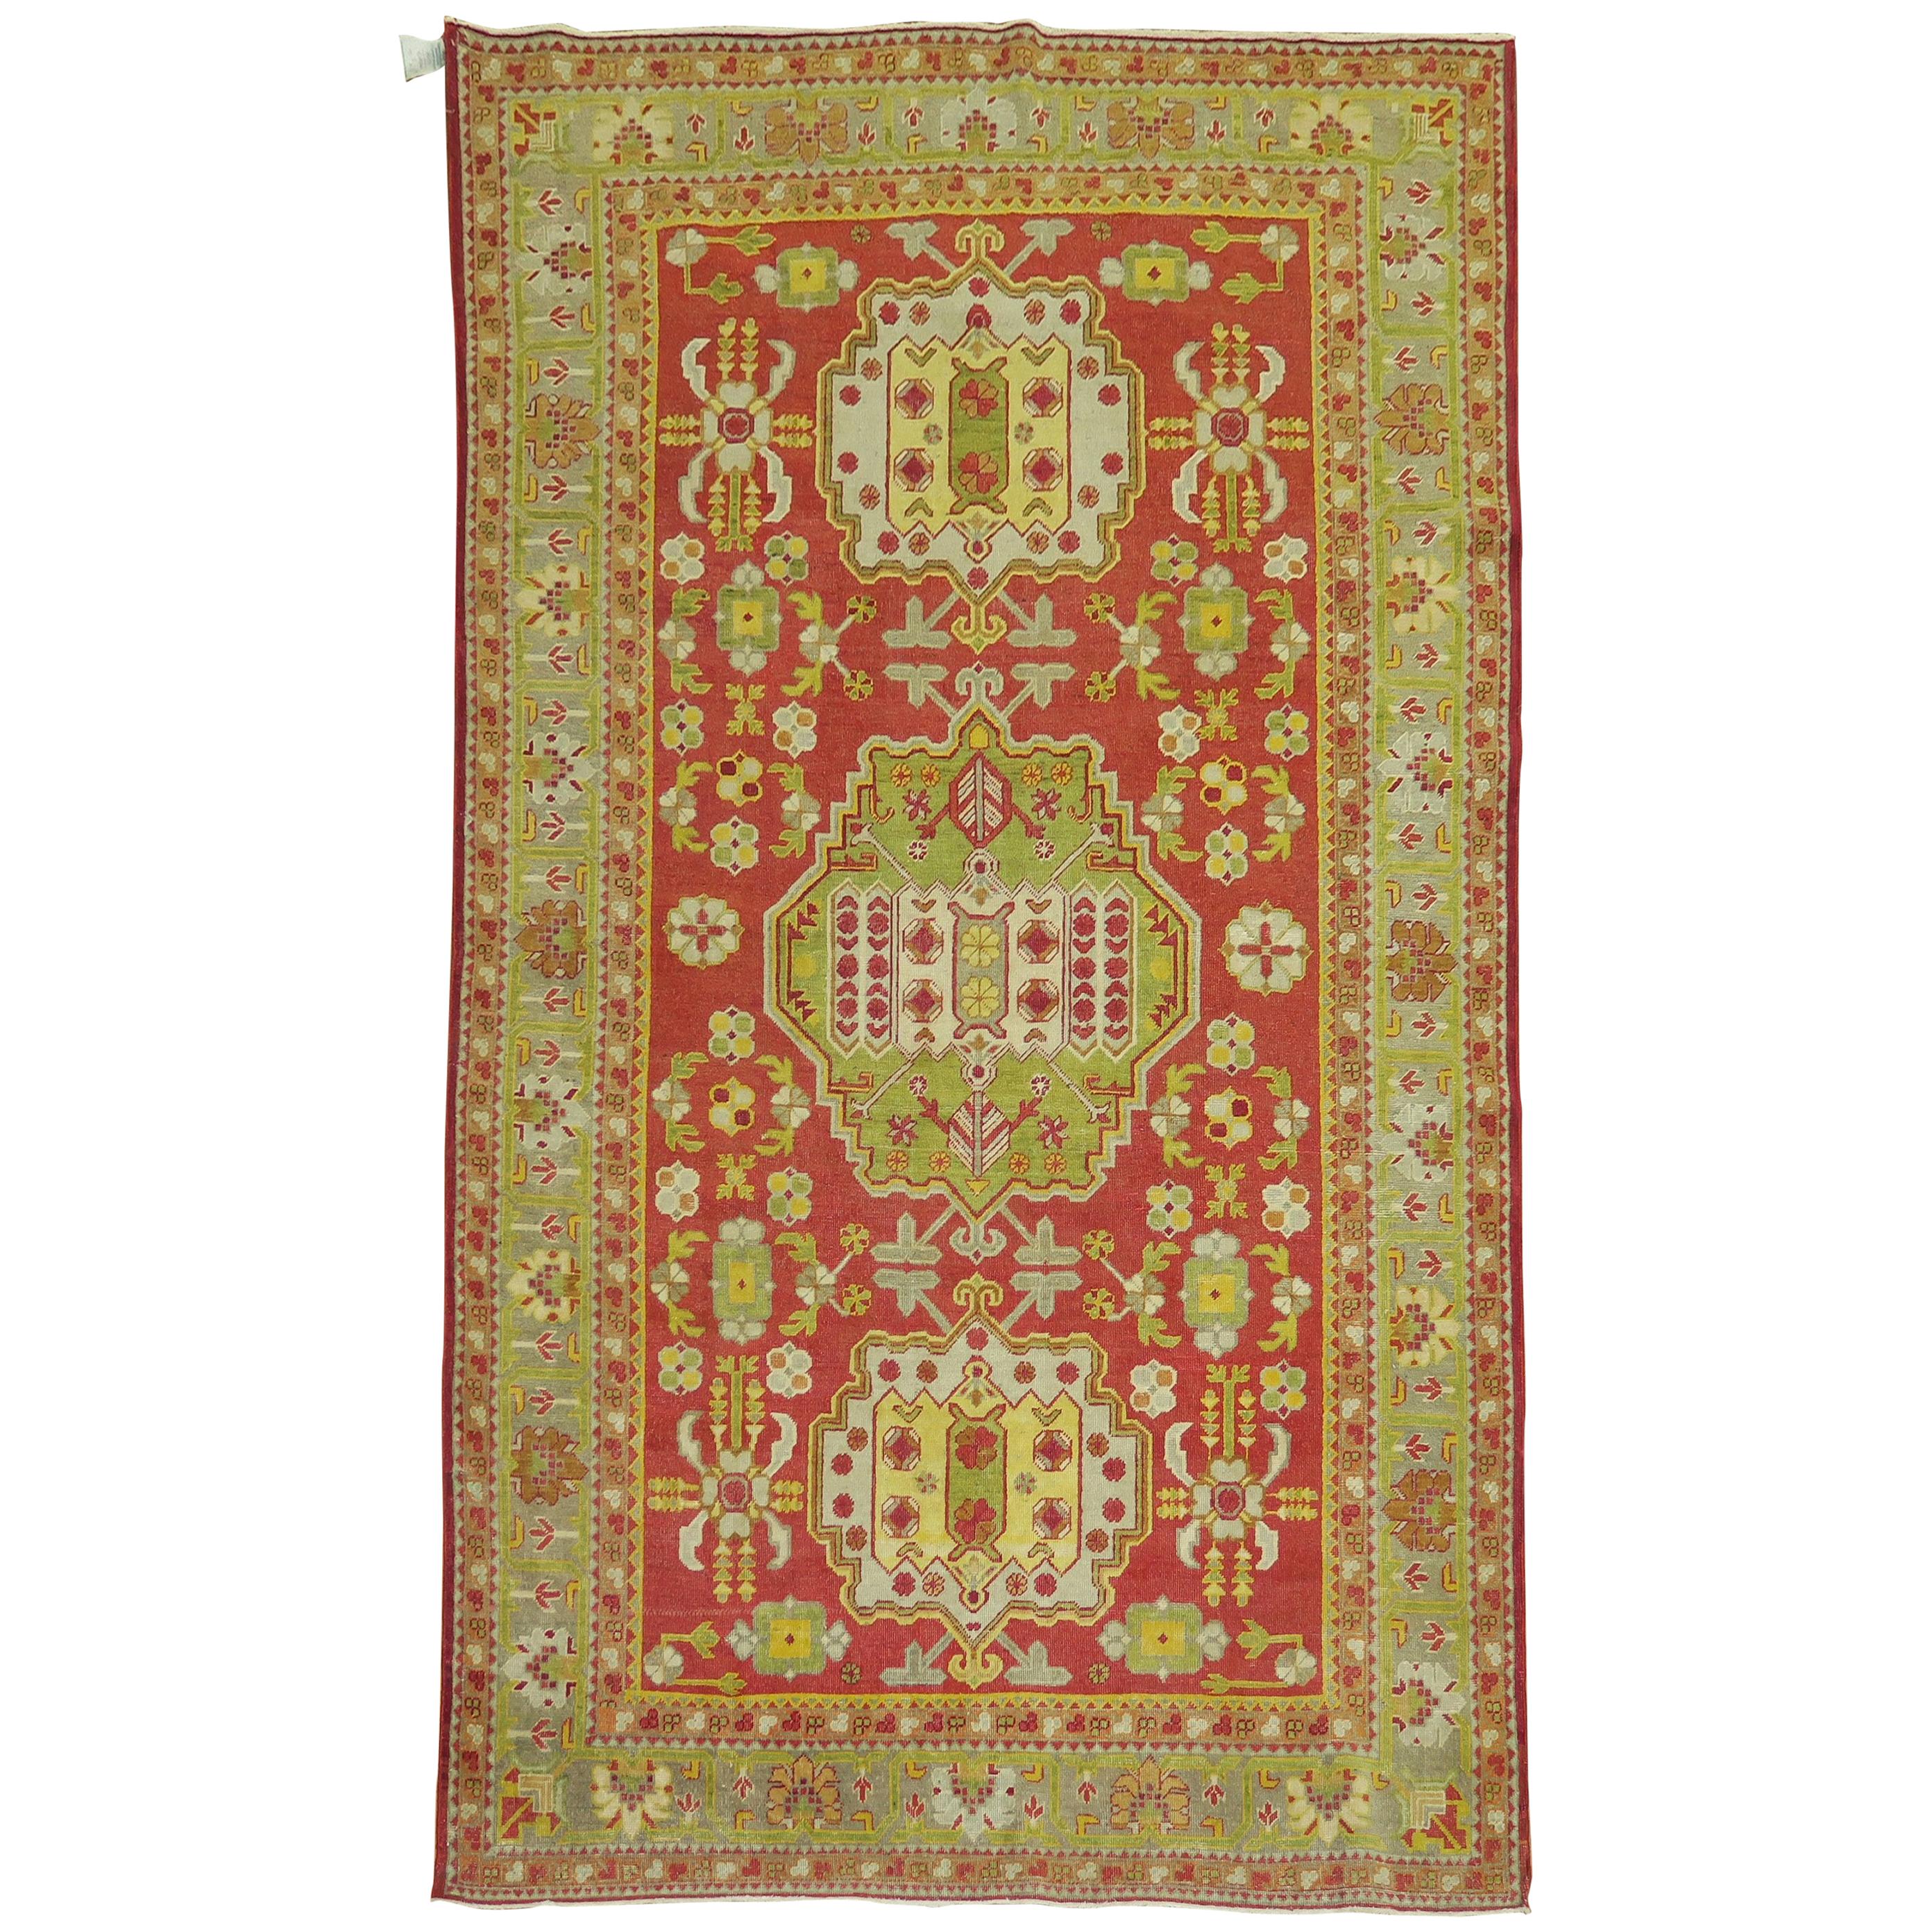 Khotan Bright Red Green Yellow Antique 20th Century Wool Handmade Oriental Rug For Sale